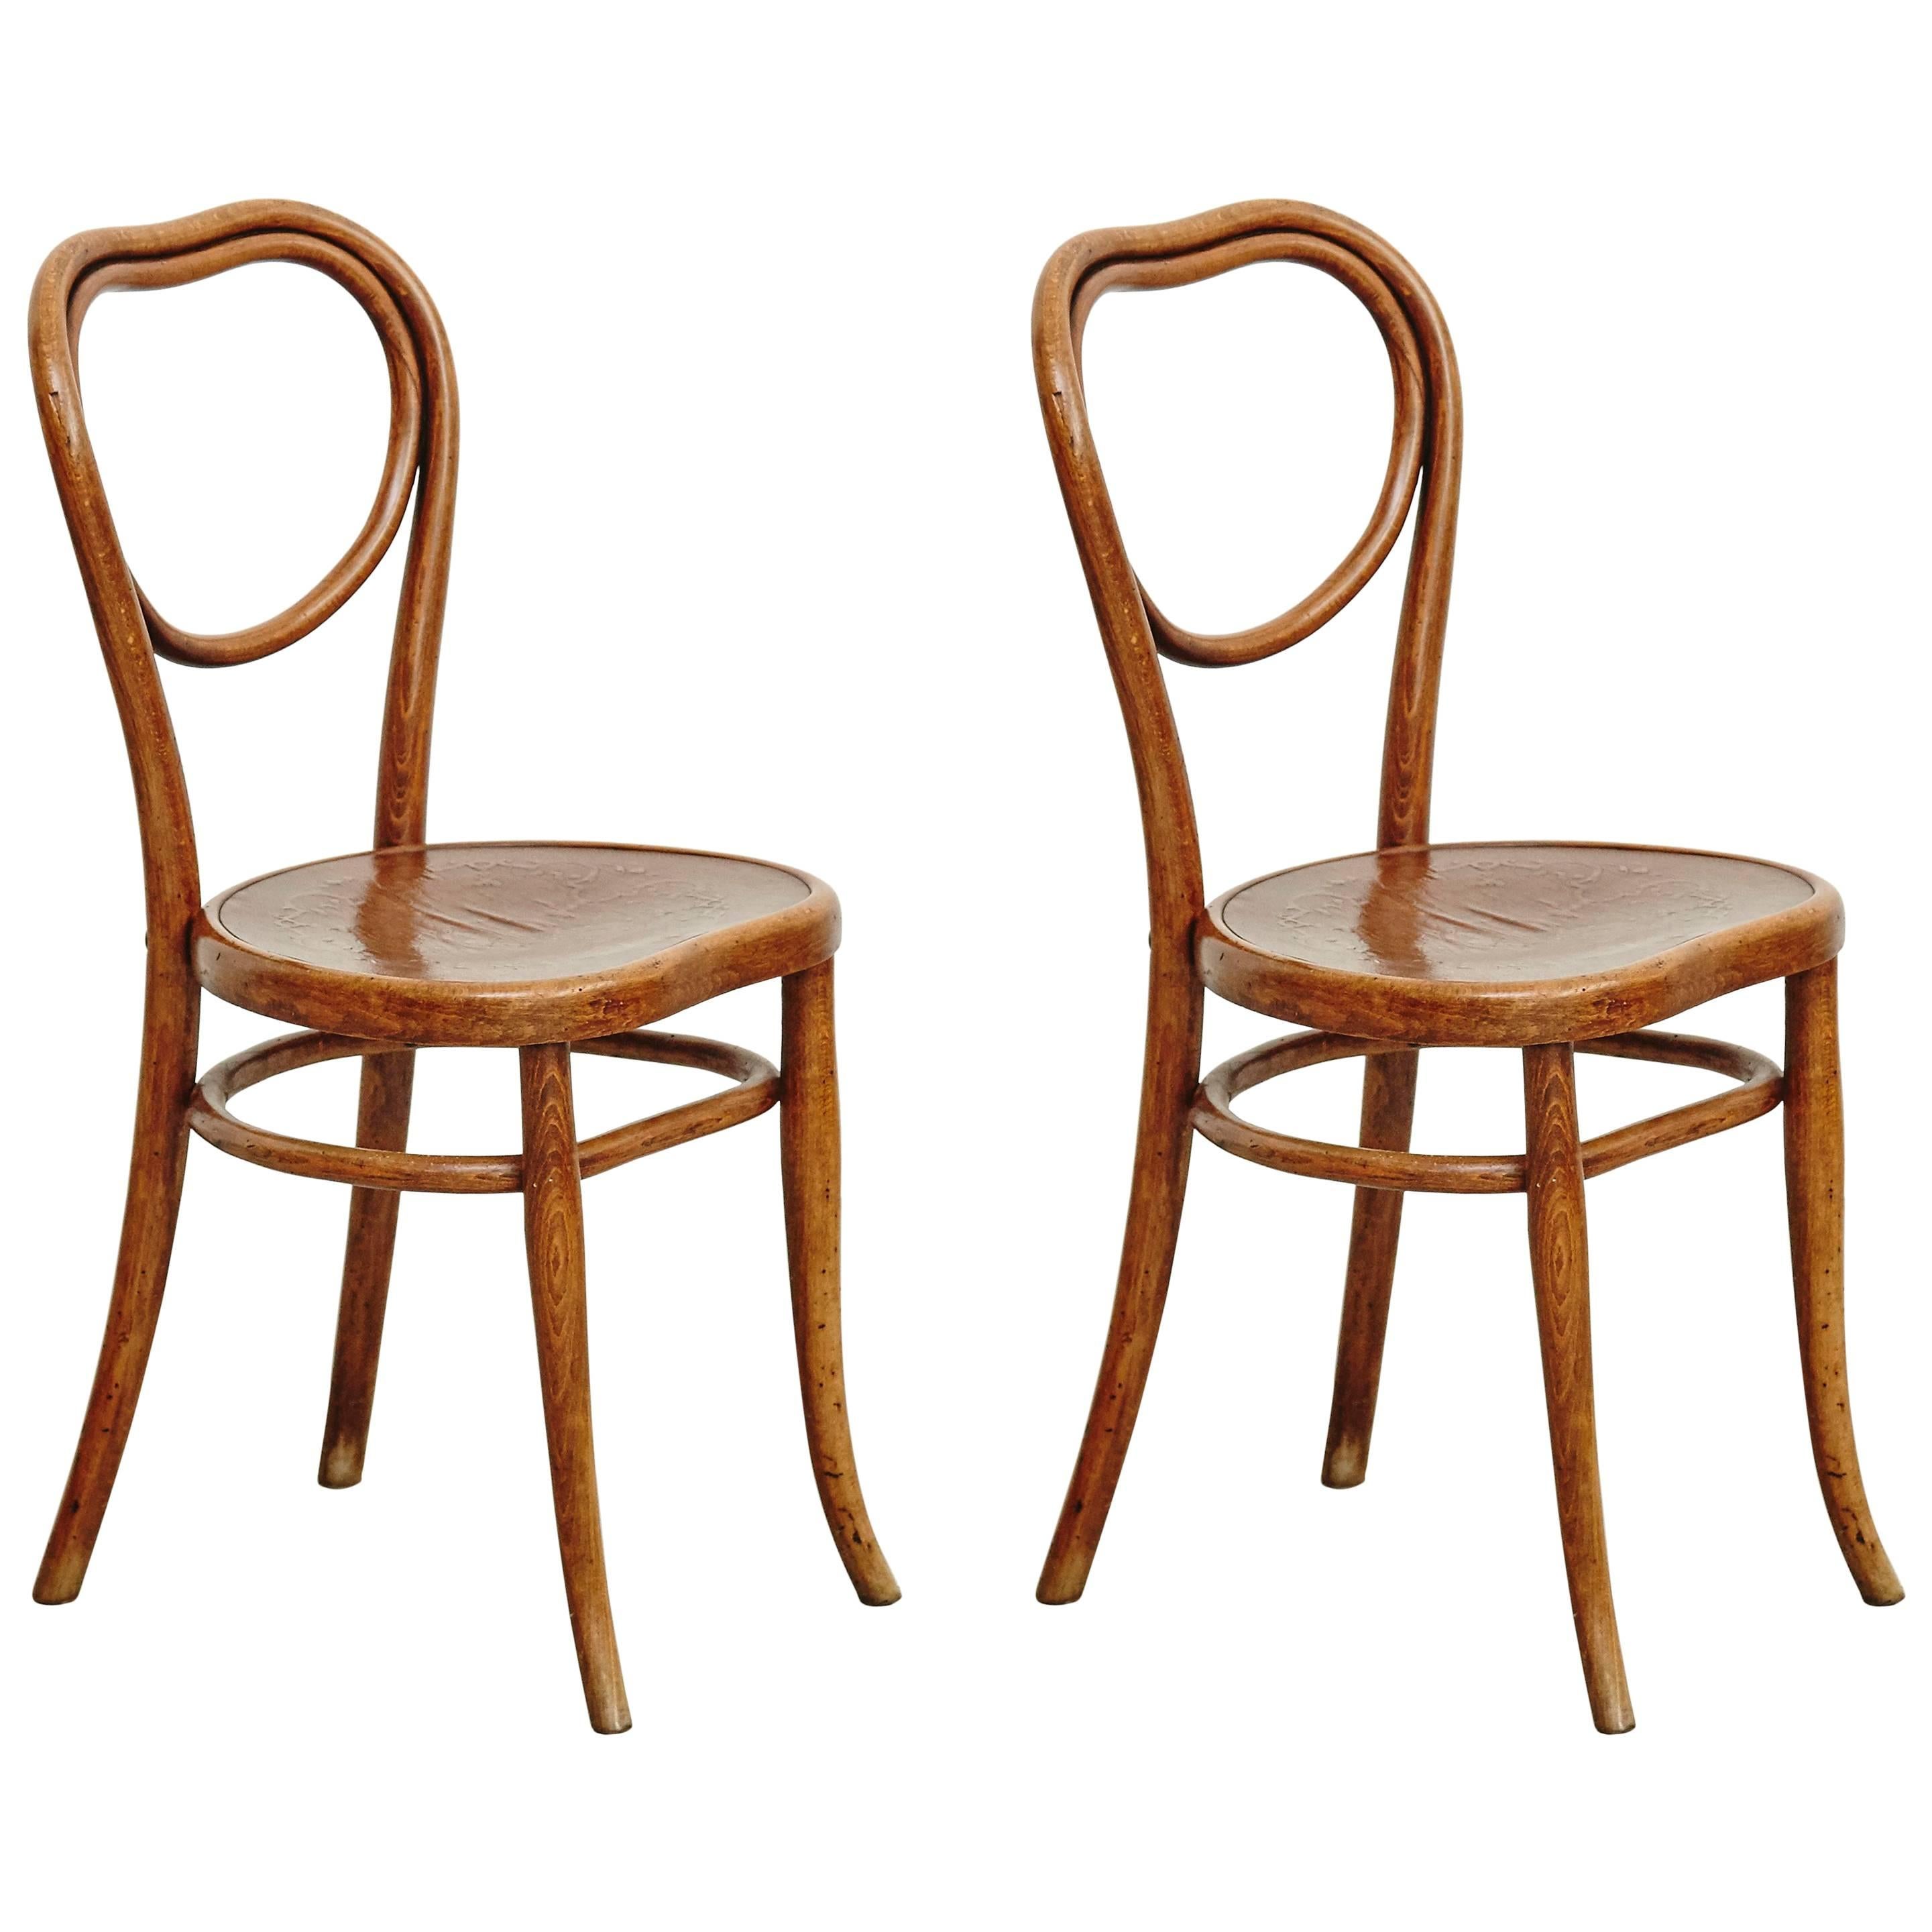 Pair of Thonet Chairs for Thonet, circa 1920